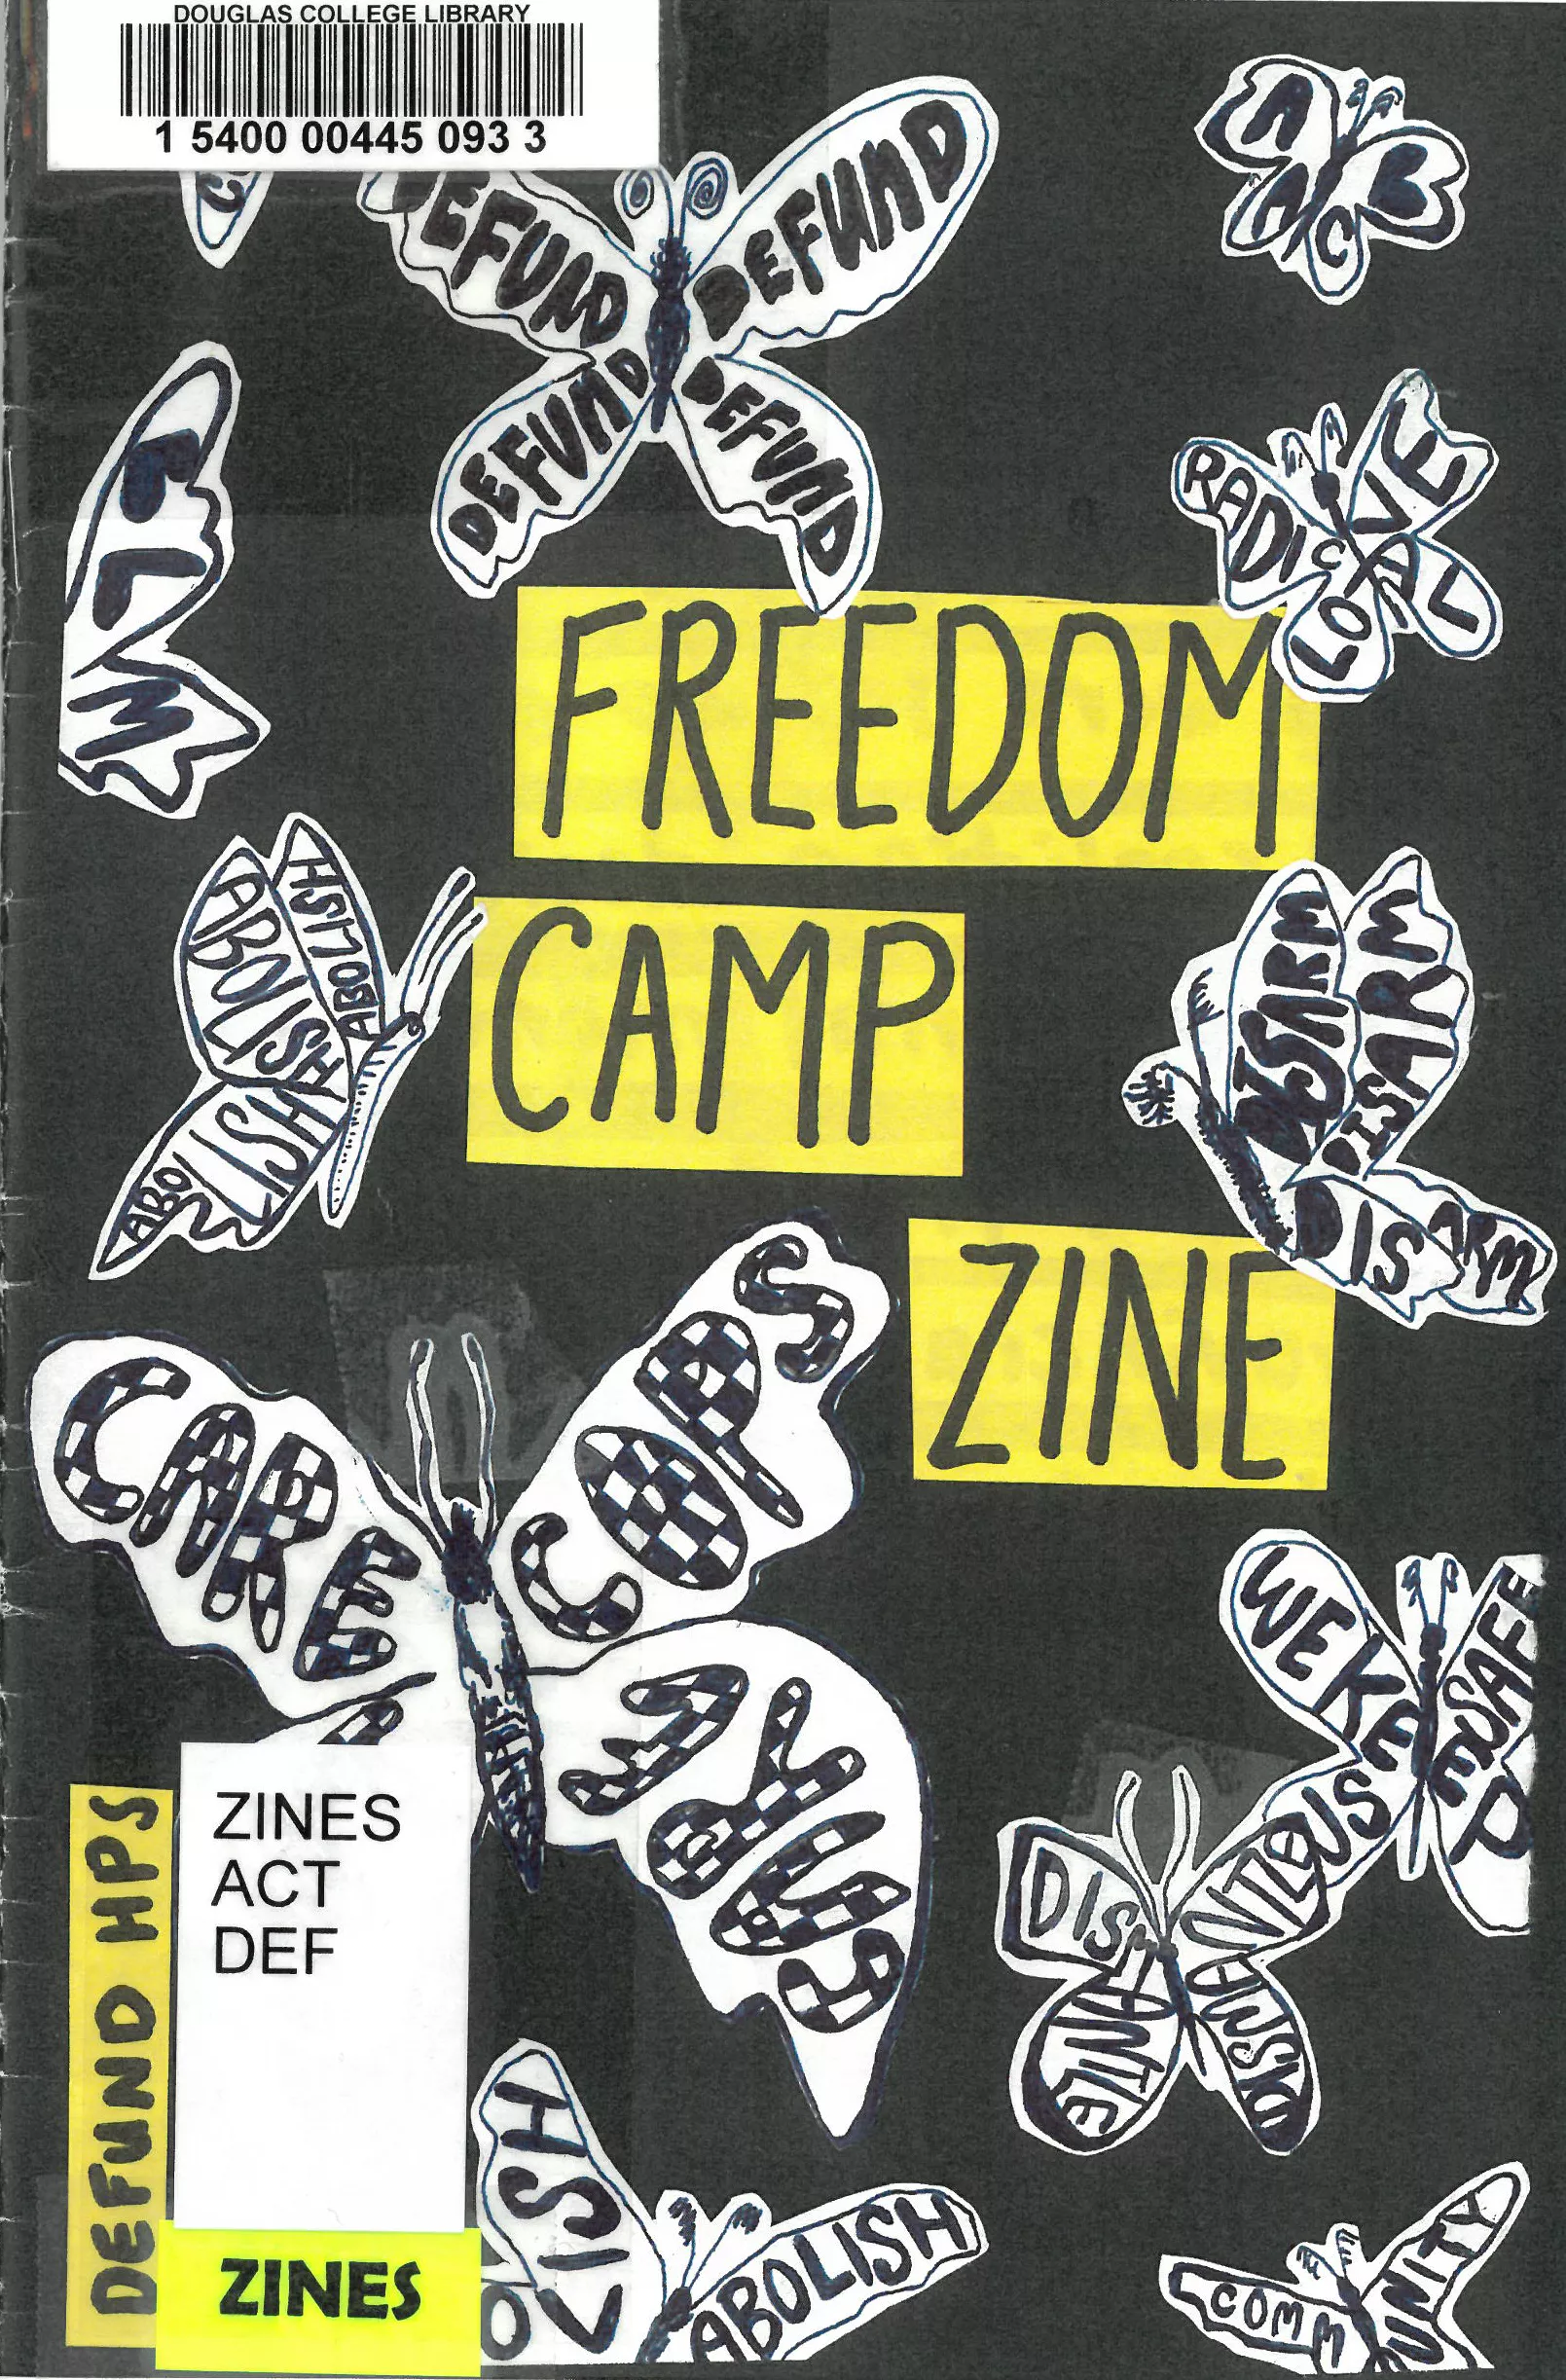 Freedom Camp zine